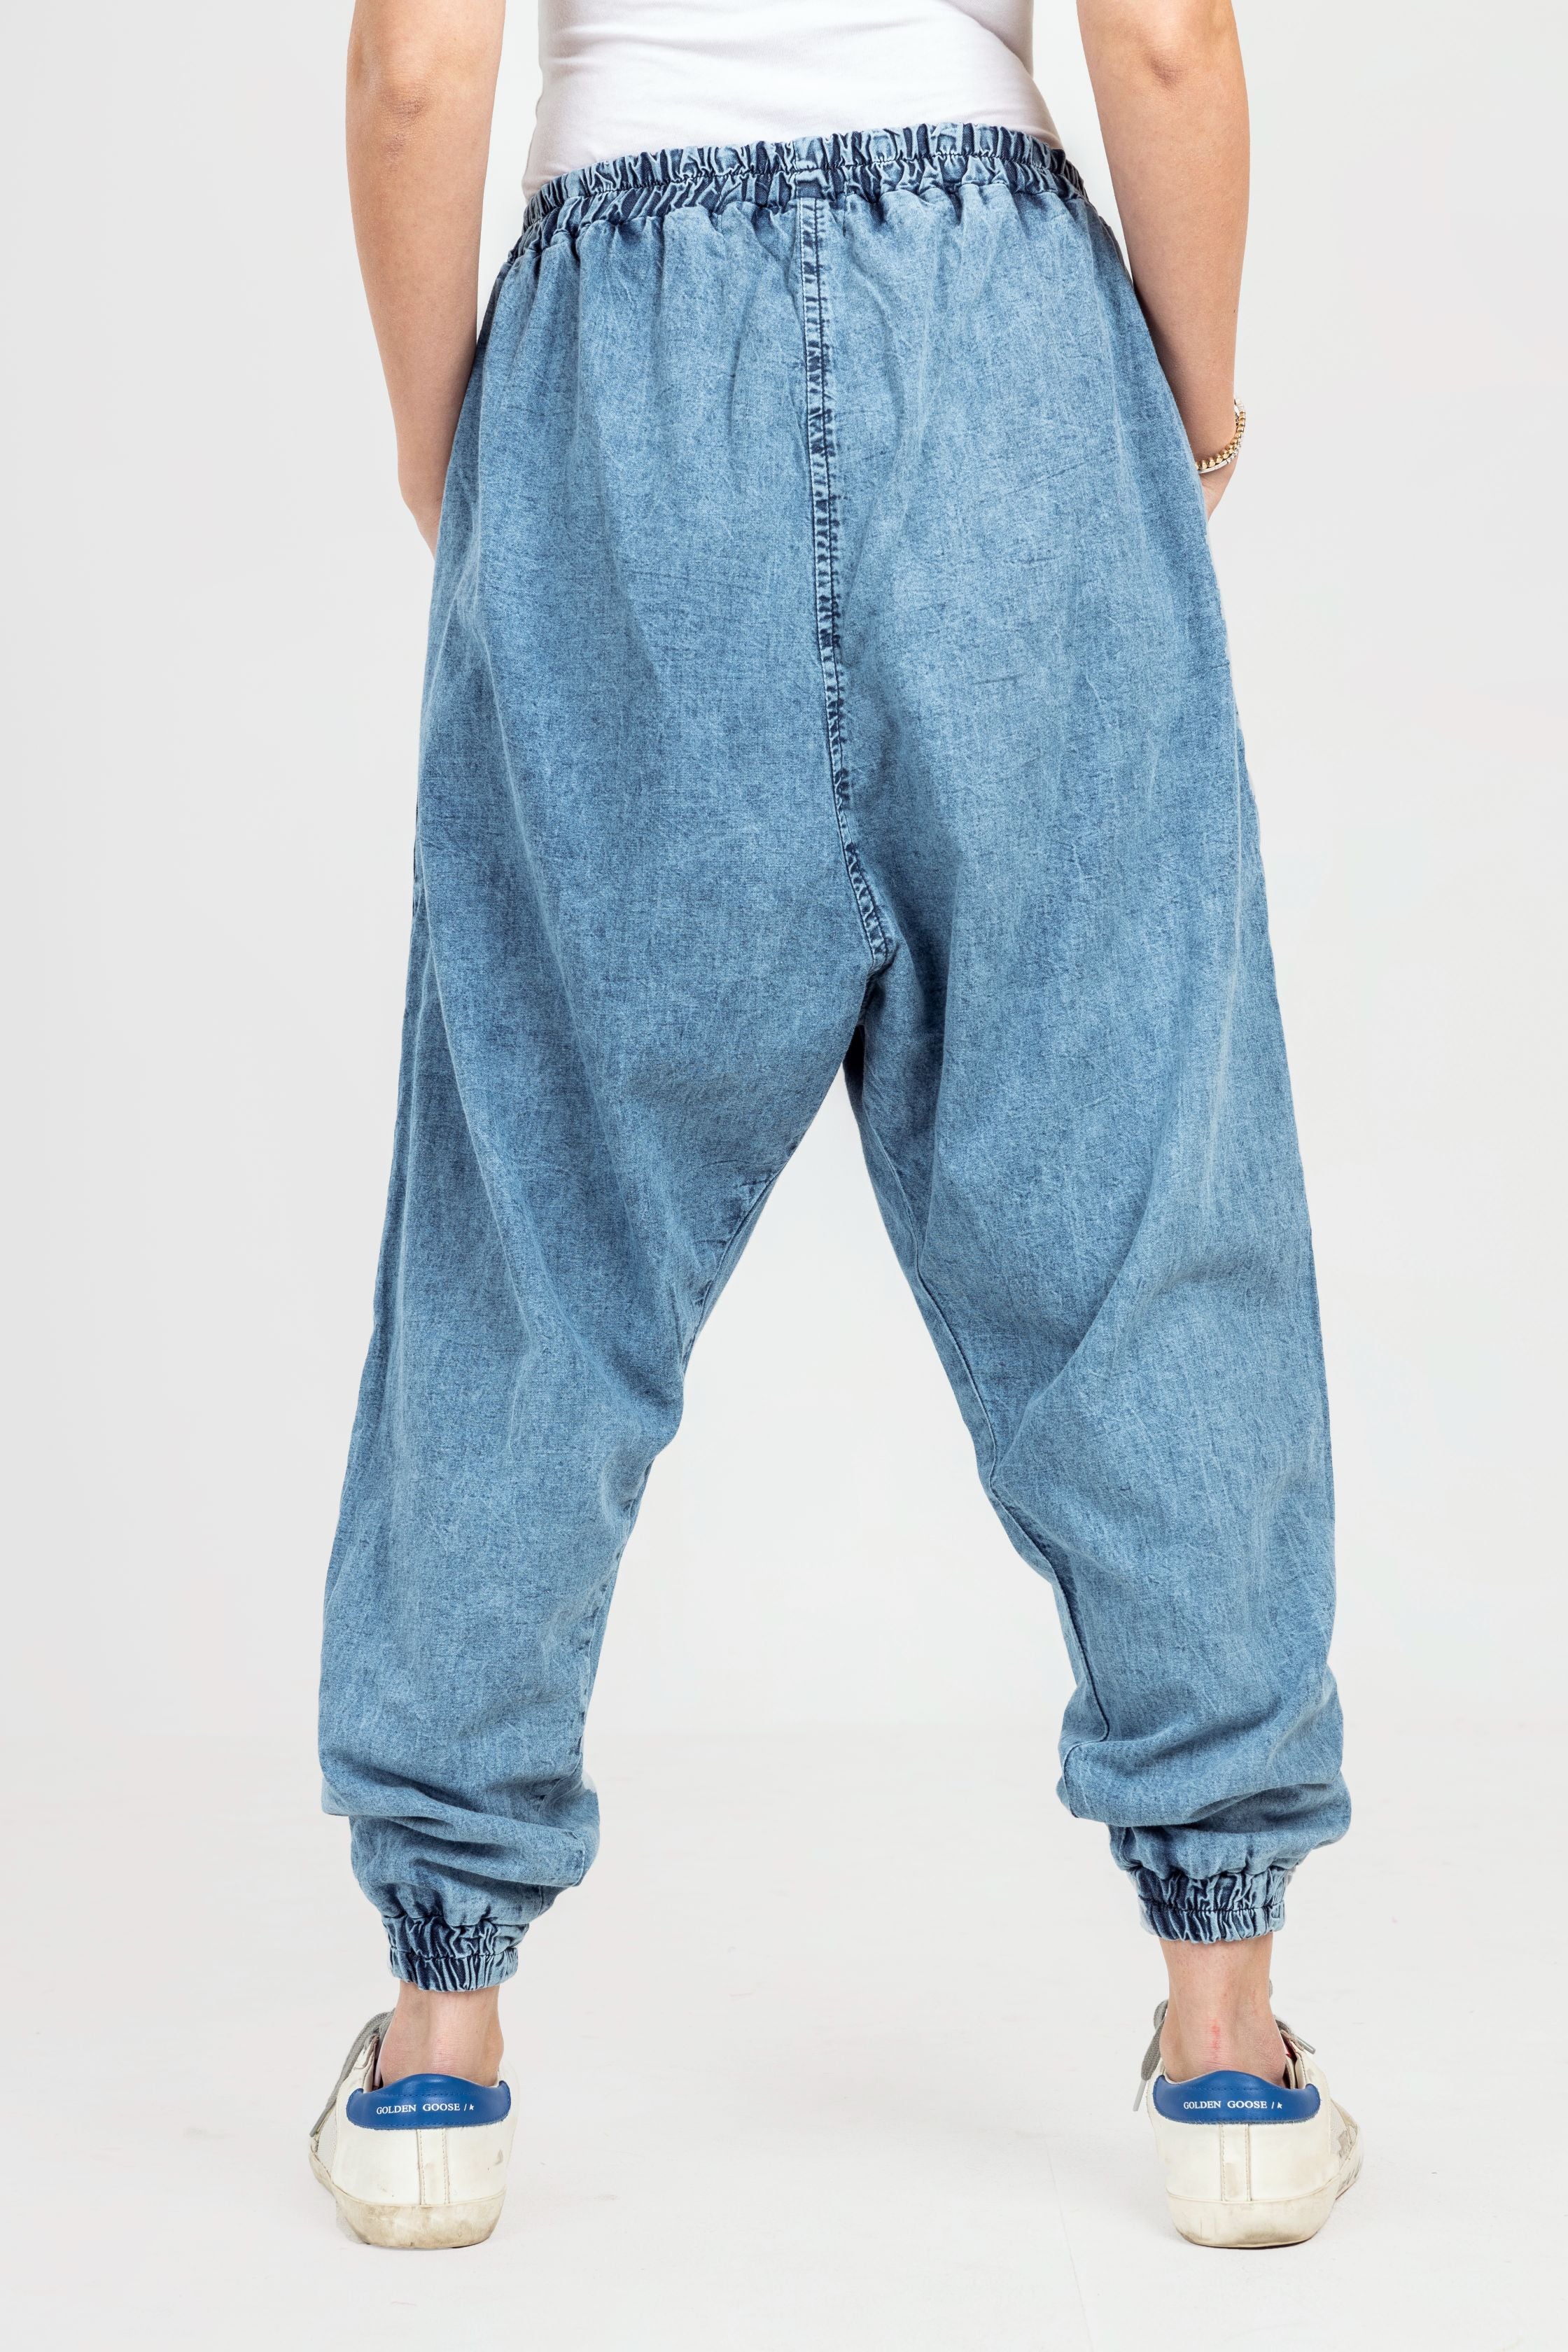 Women Design Ladies Blue Denim Harem Pants Elastic Casual Jeans Female |  eBay